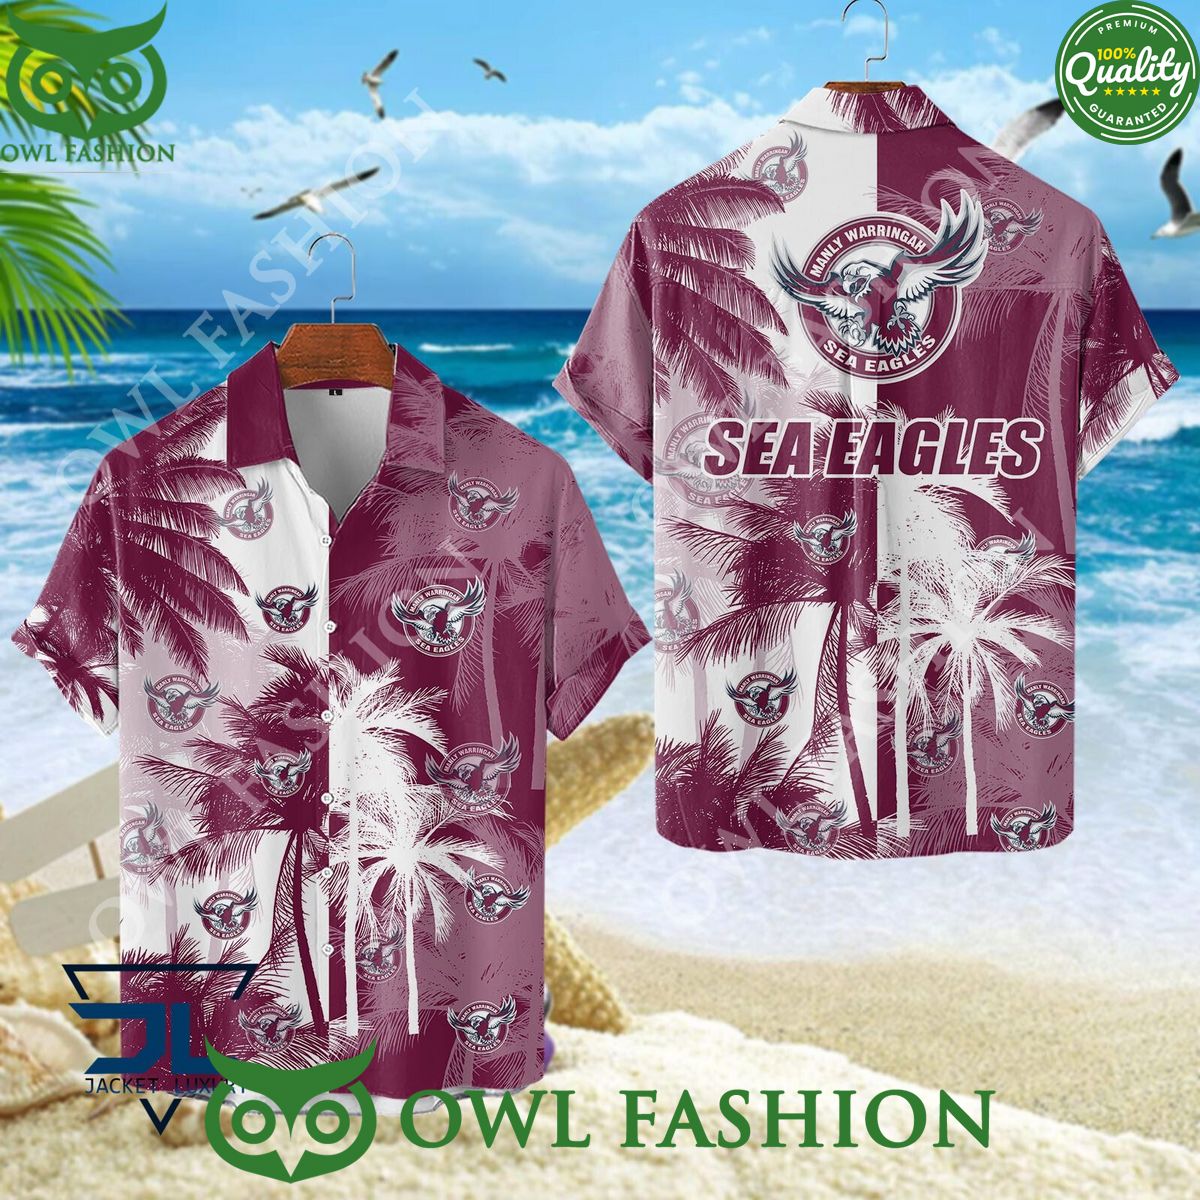 manly warringah sea eagles nrl australasia football rugby hawaiian shirt and short 1 eISS8.jpg